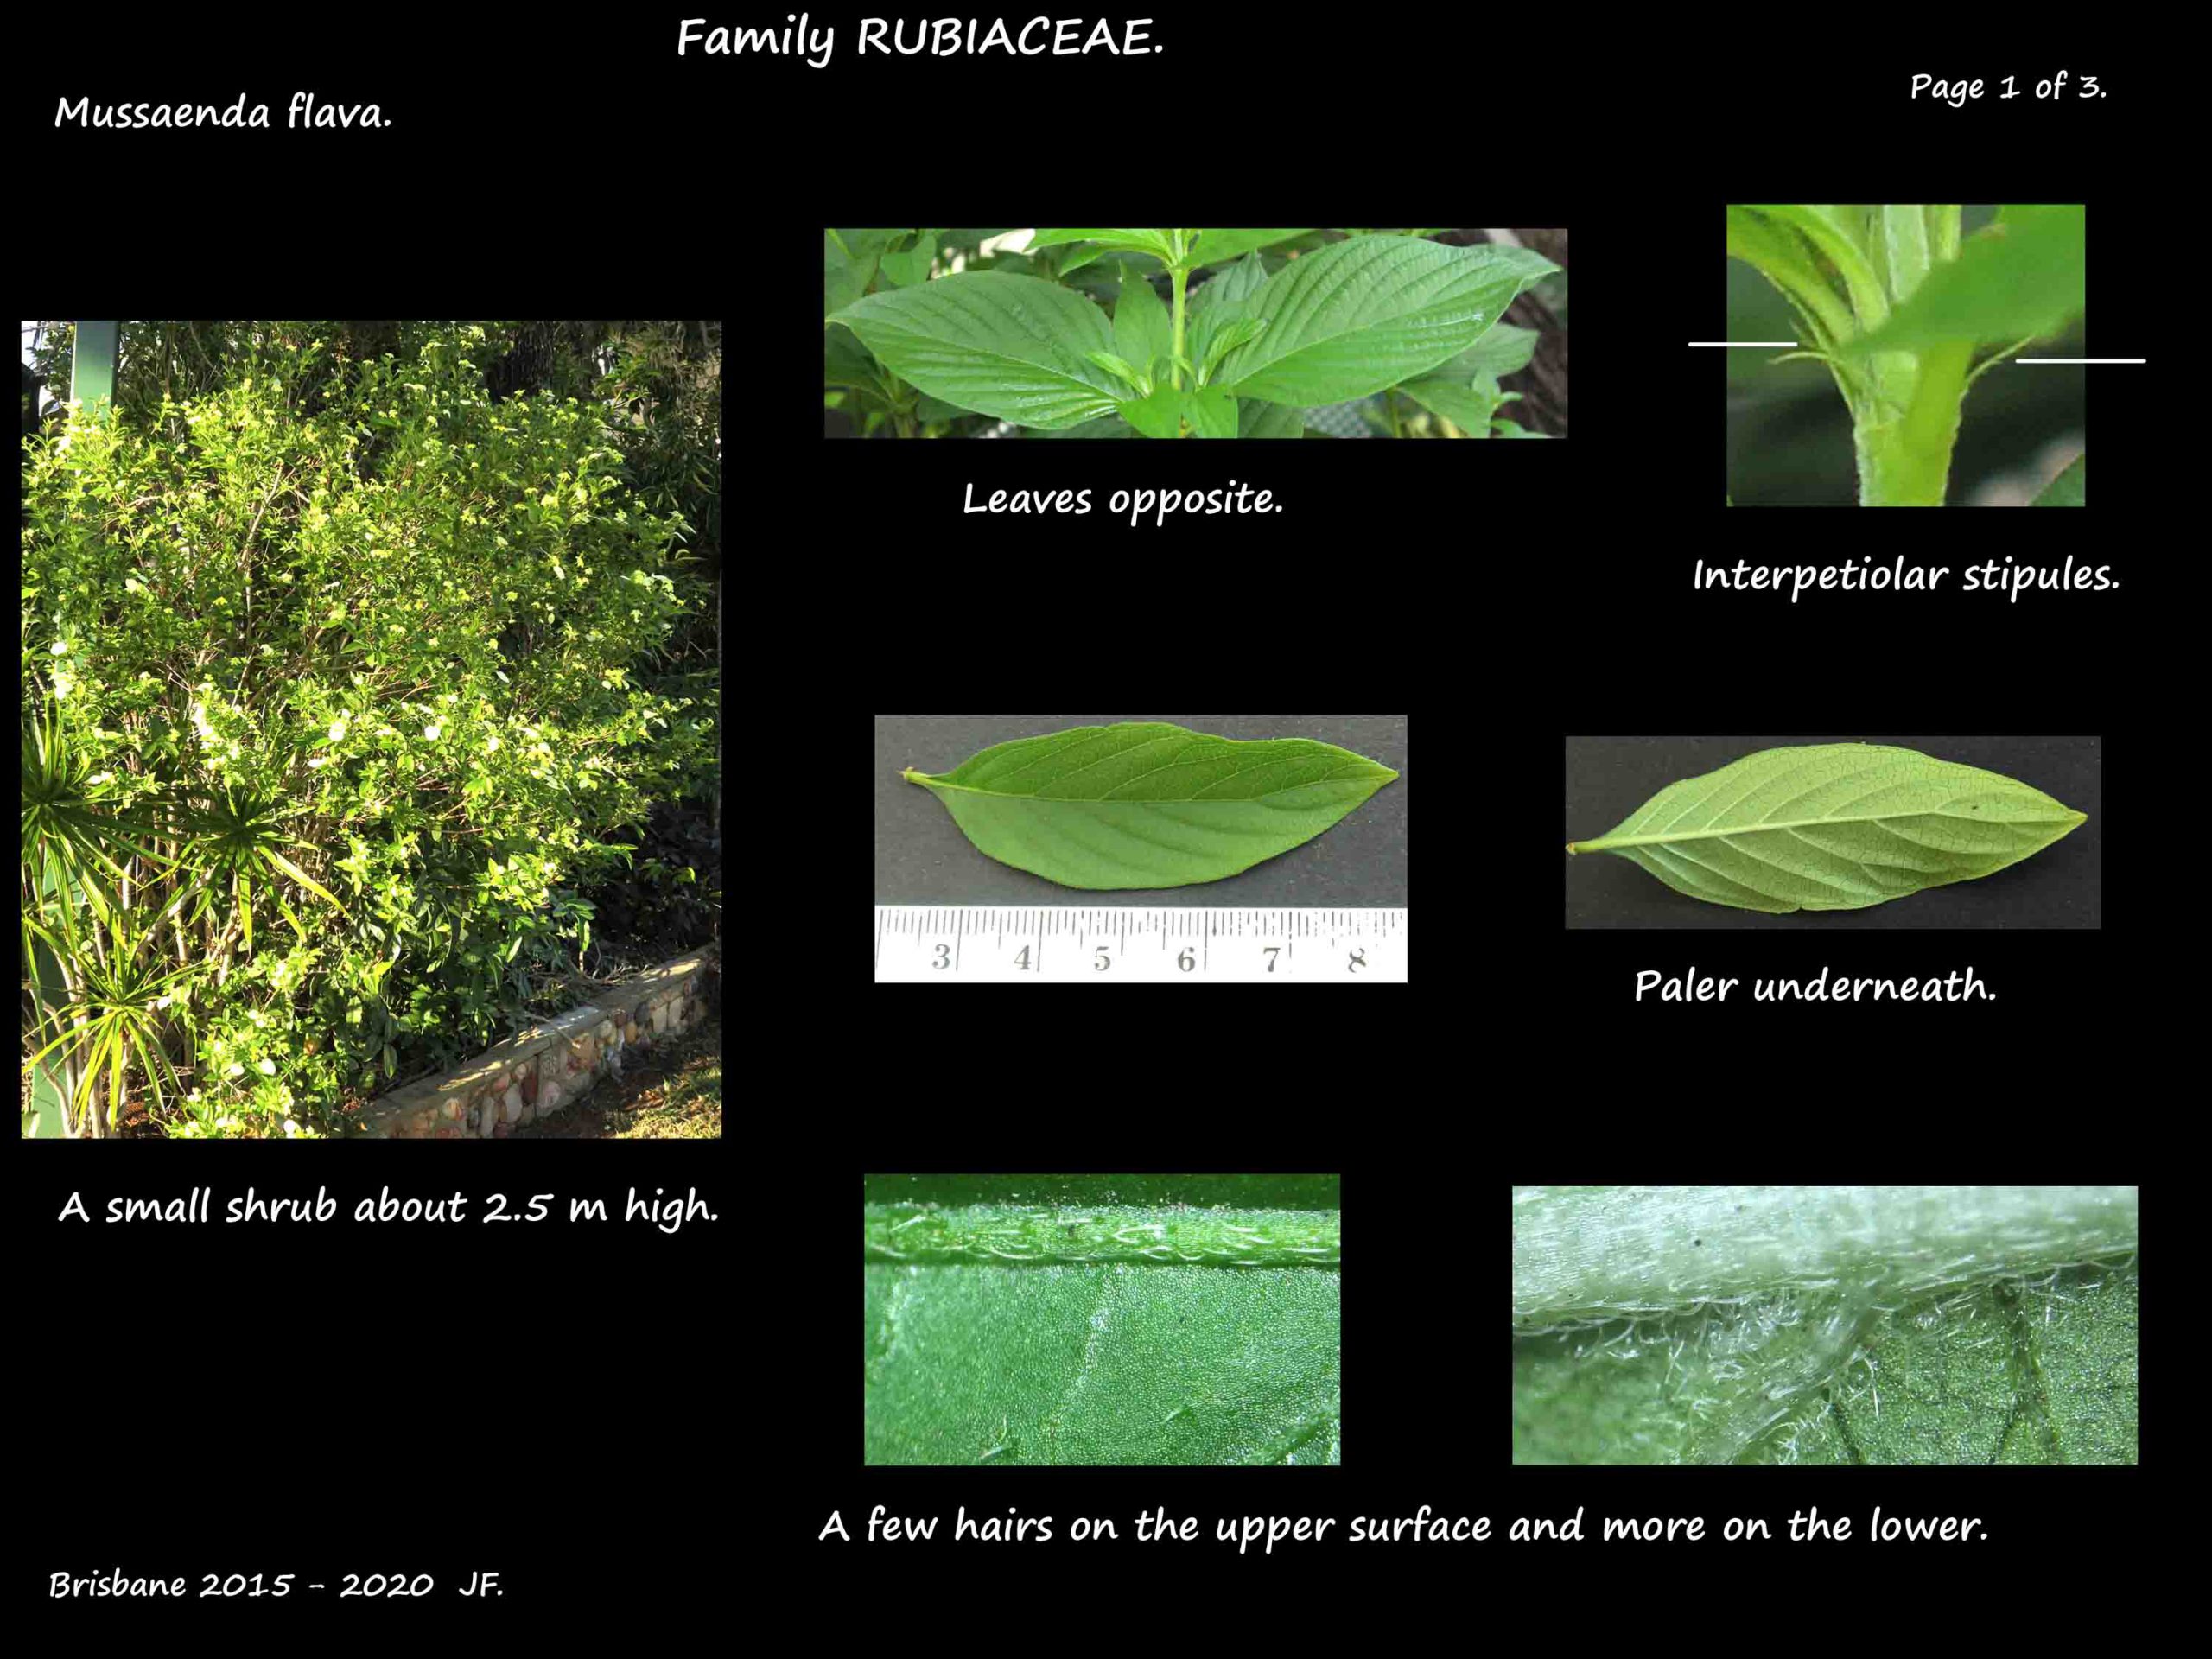 1 Mussaenda flava shrub & leaves